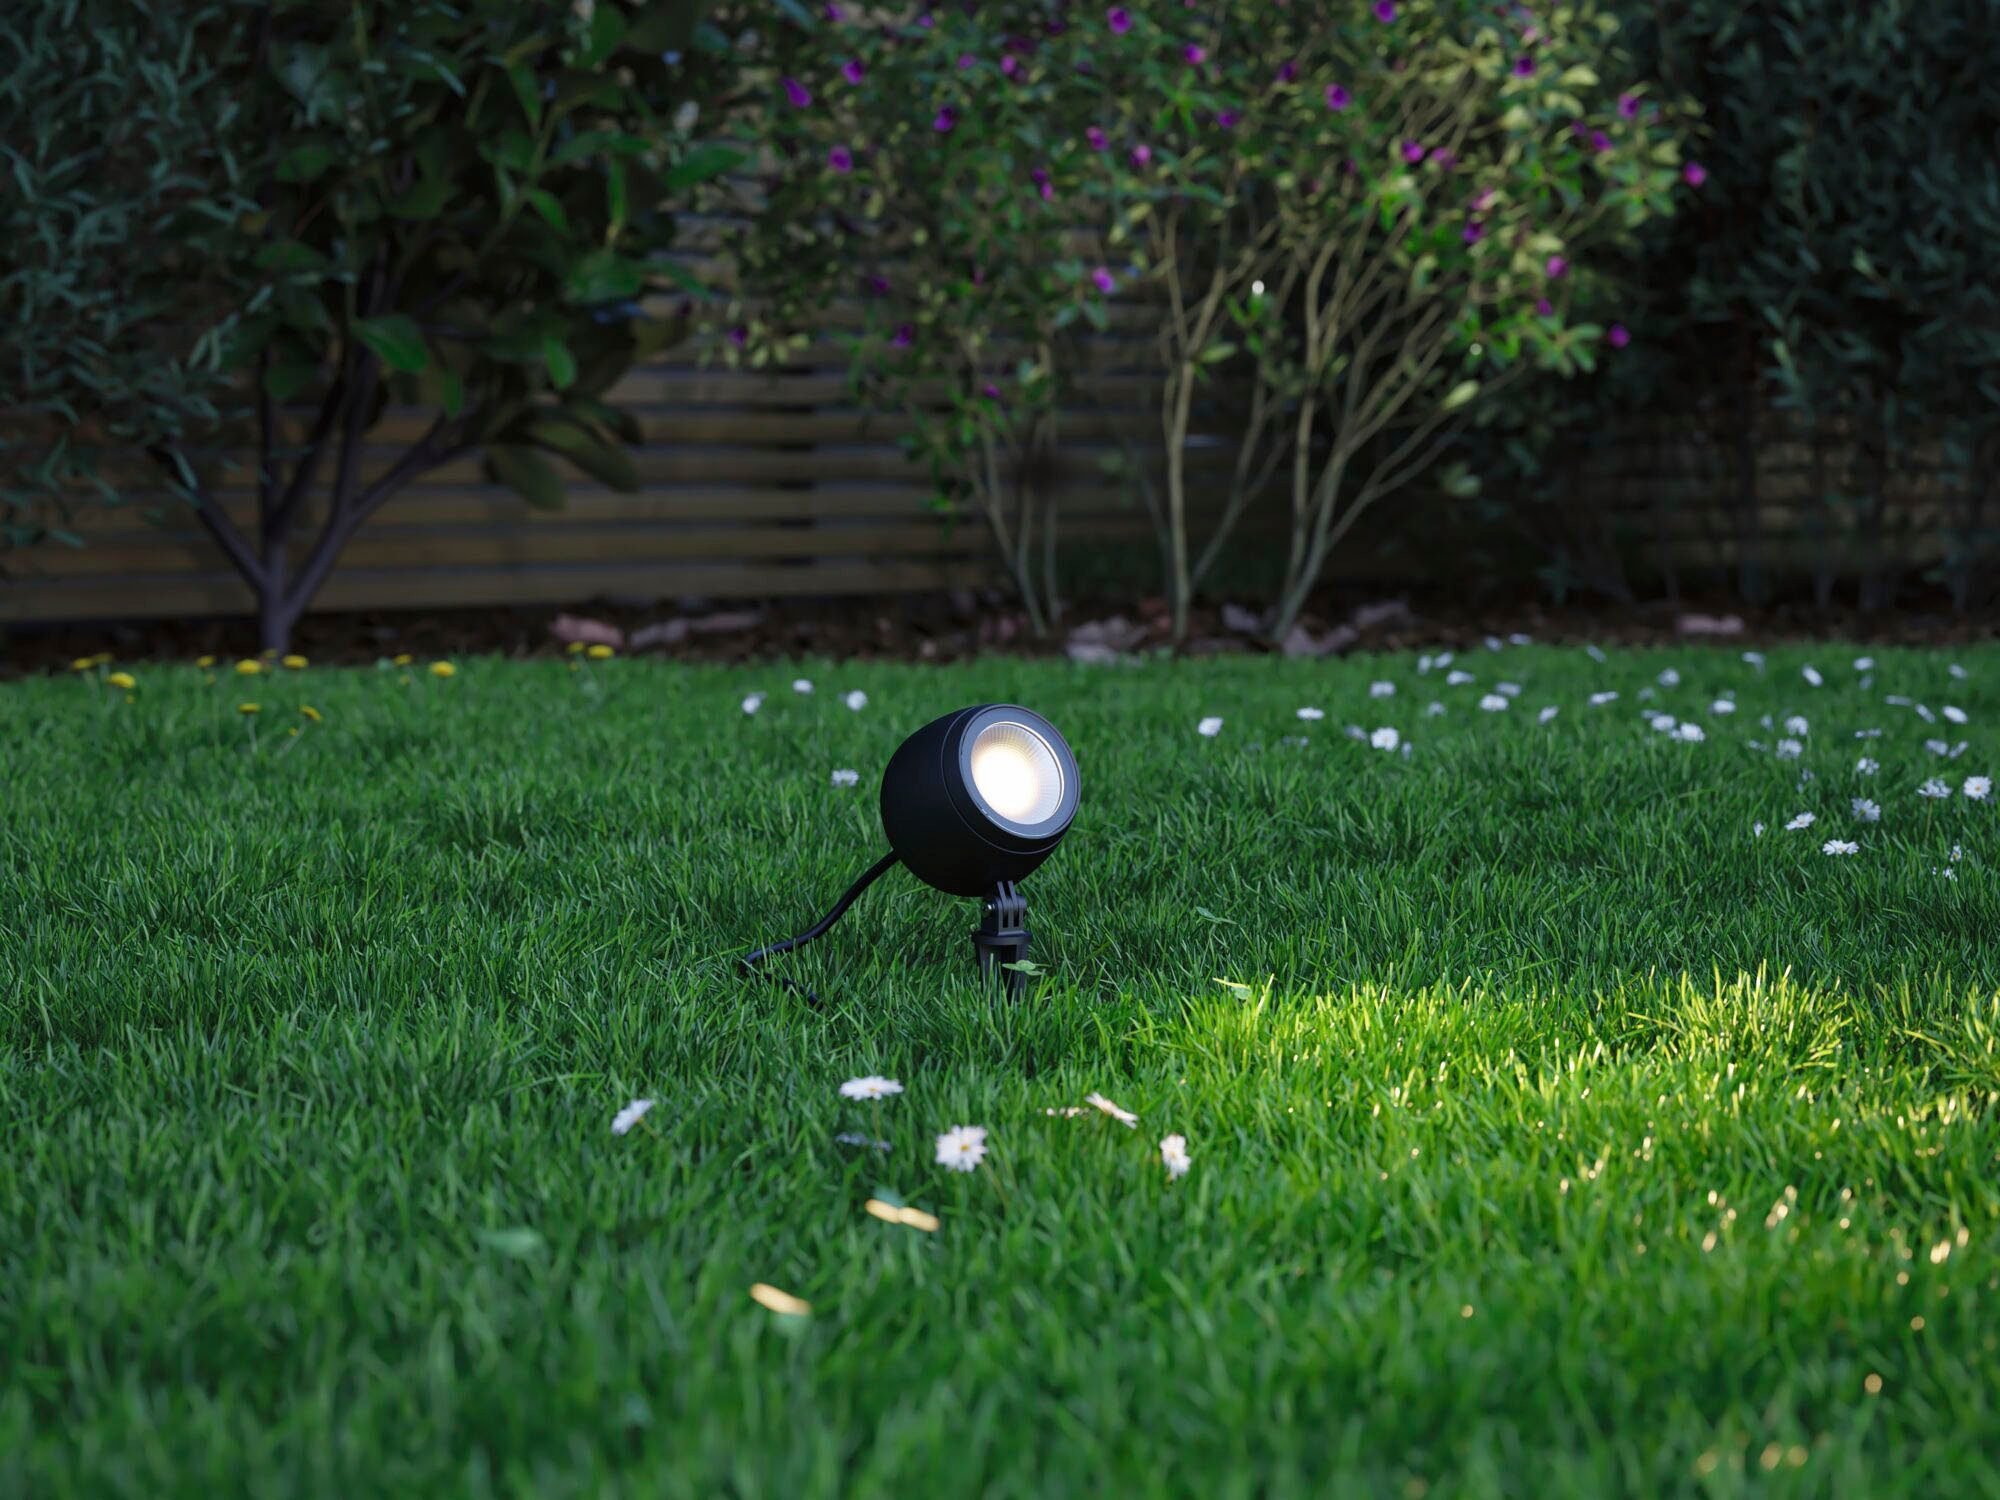 Paulmann LED Gartenleuchte Outdoor 230V Spot Kikolo Insect friendly ZigBee, LED  fest integriert, Warmweiß, Insektenfreundlich, Gartenbeleuchtung mit  Erdspieß setzt Pflanzen in Szene